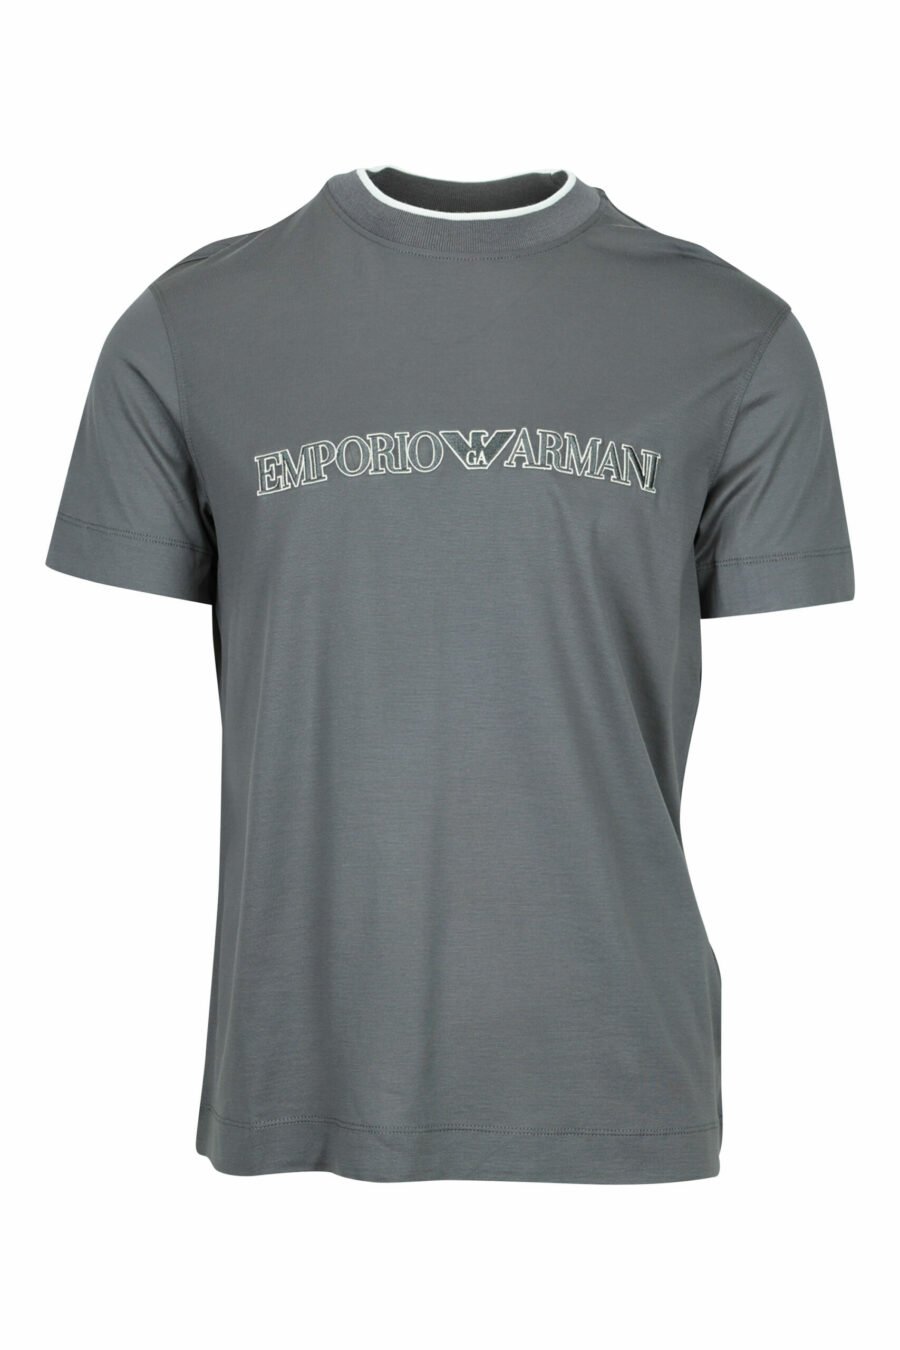 Camiseta gris con maxilogo "emporio" - 8058947987238 scaled